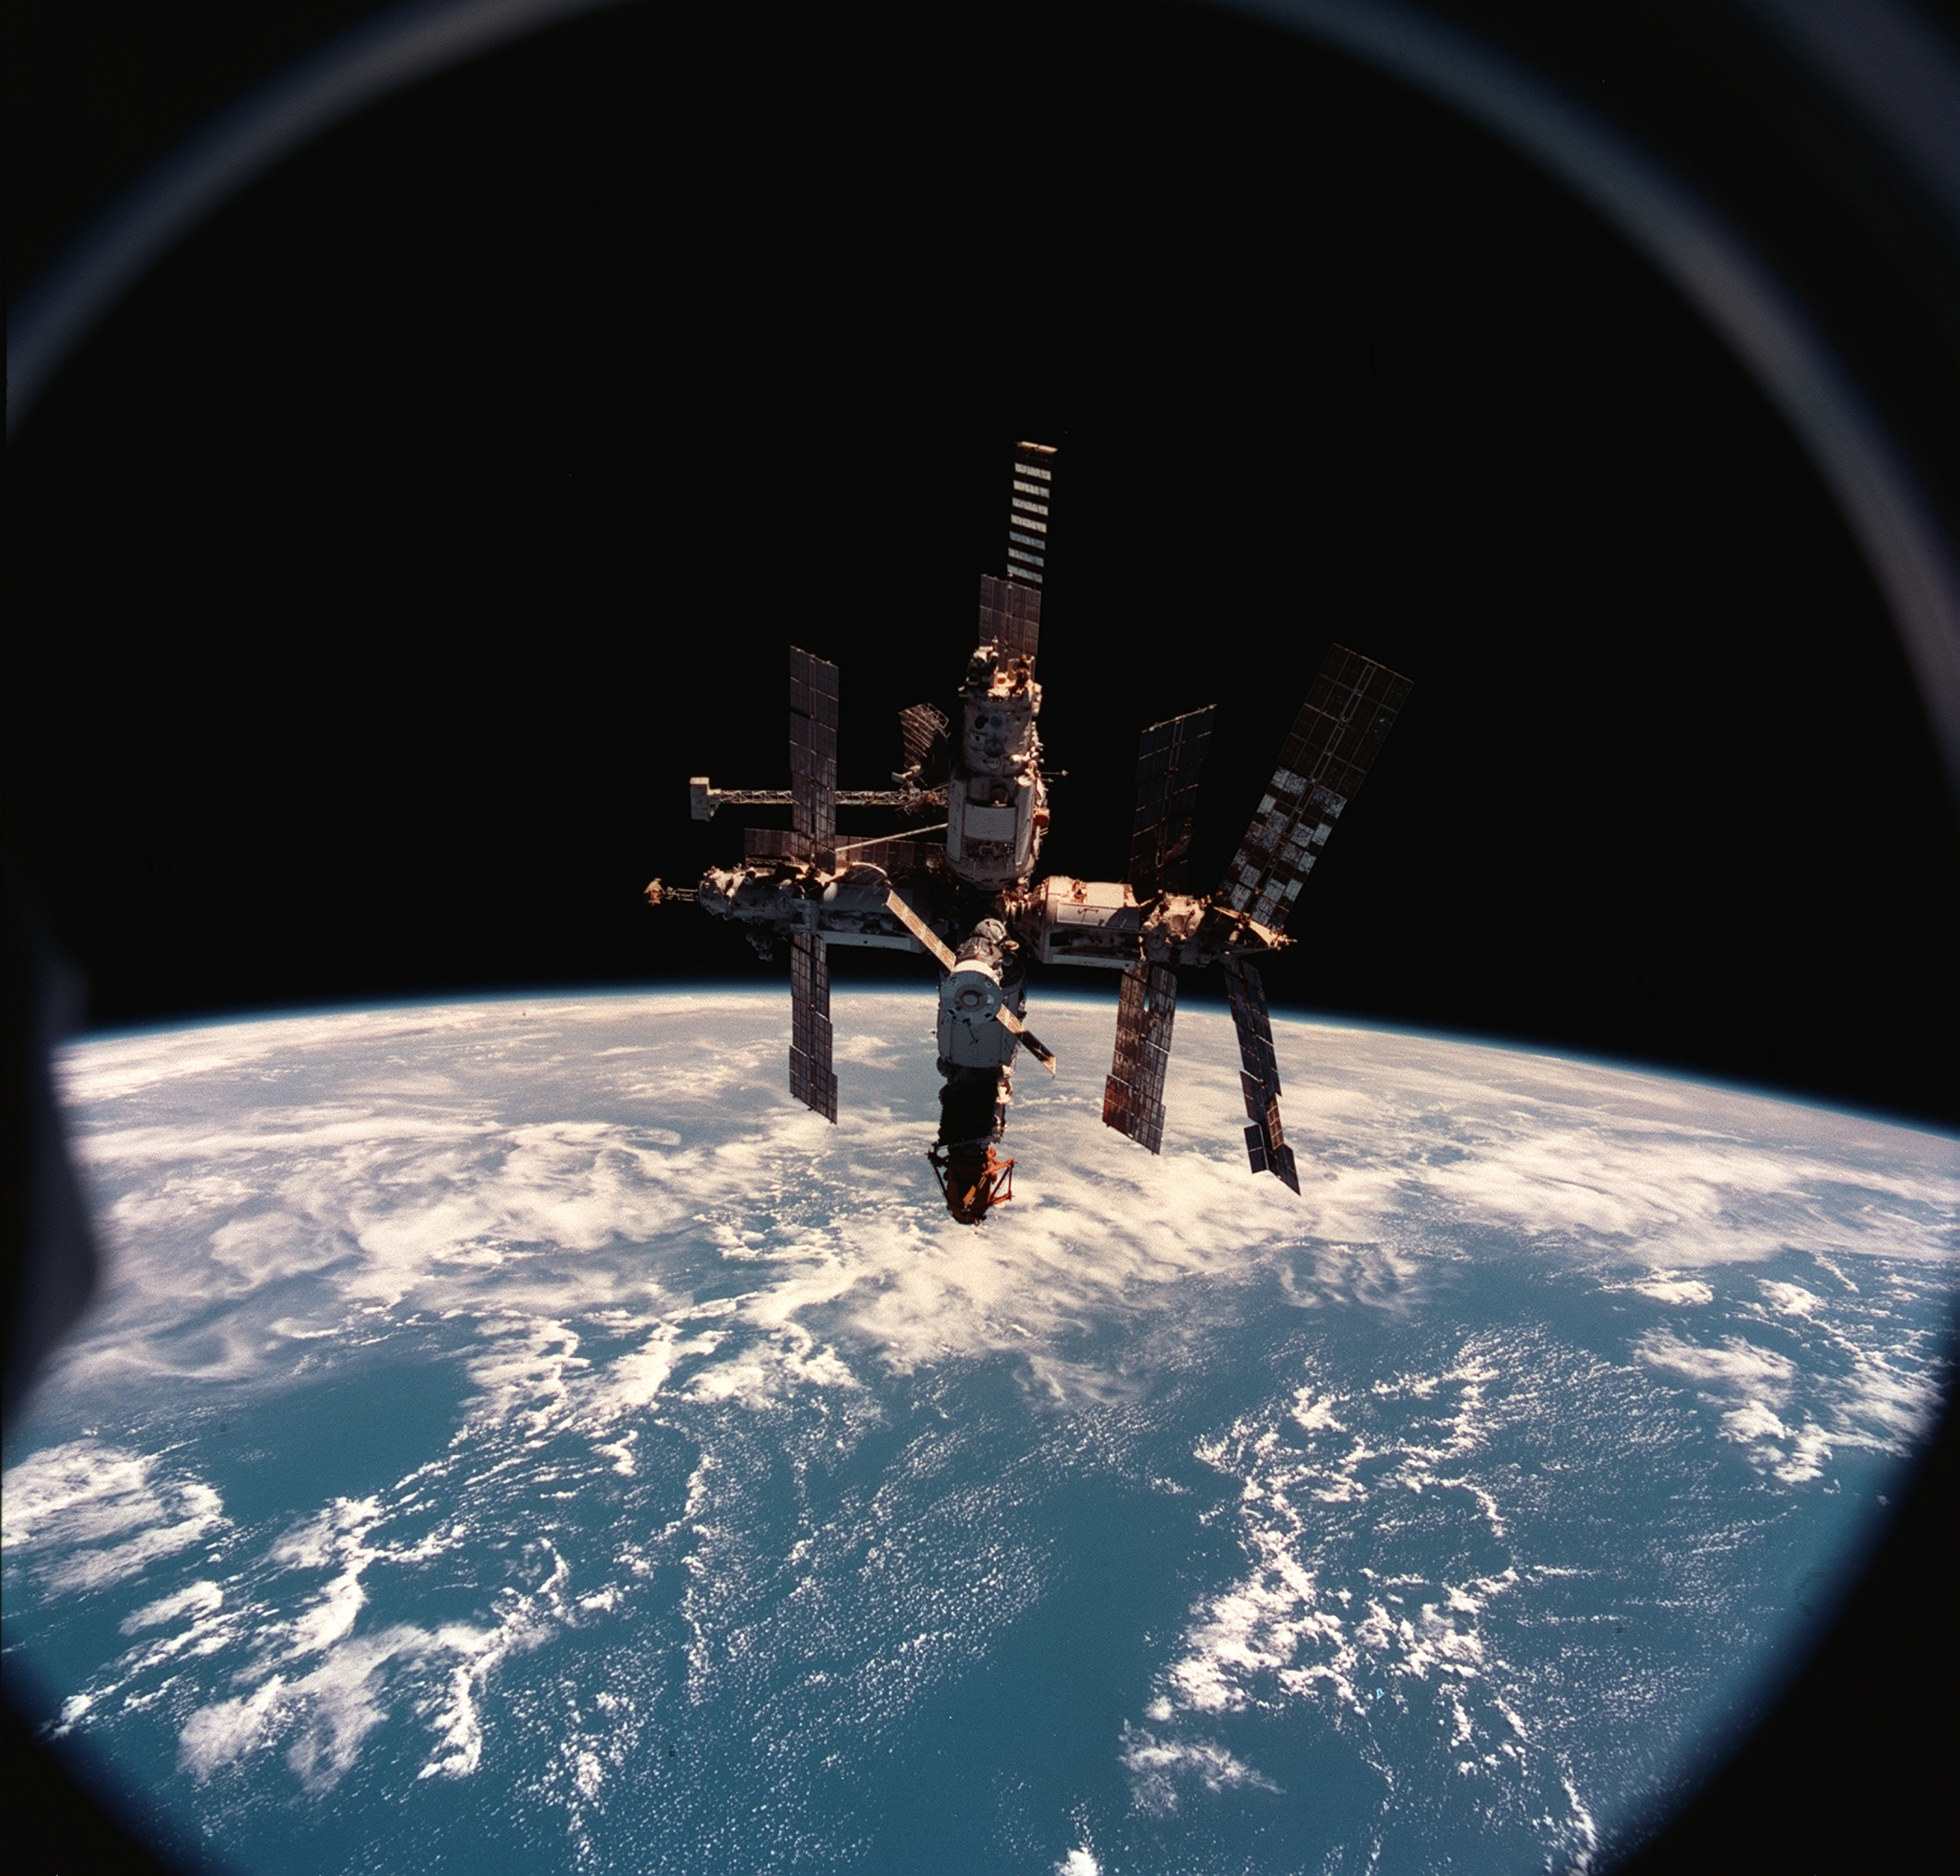 Mir space station 12 June 1998